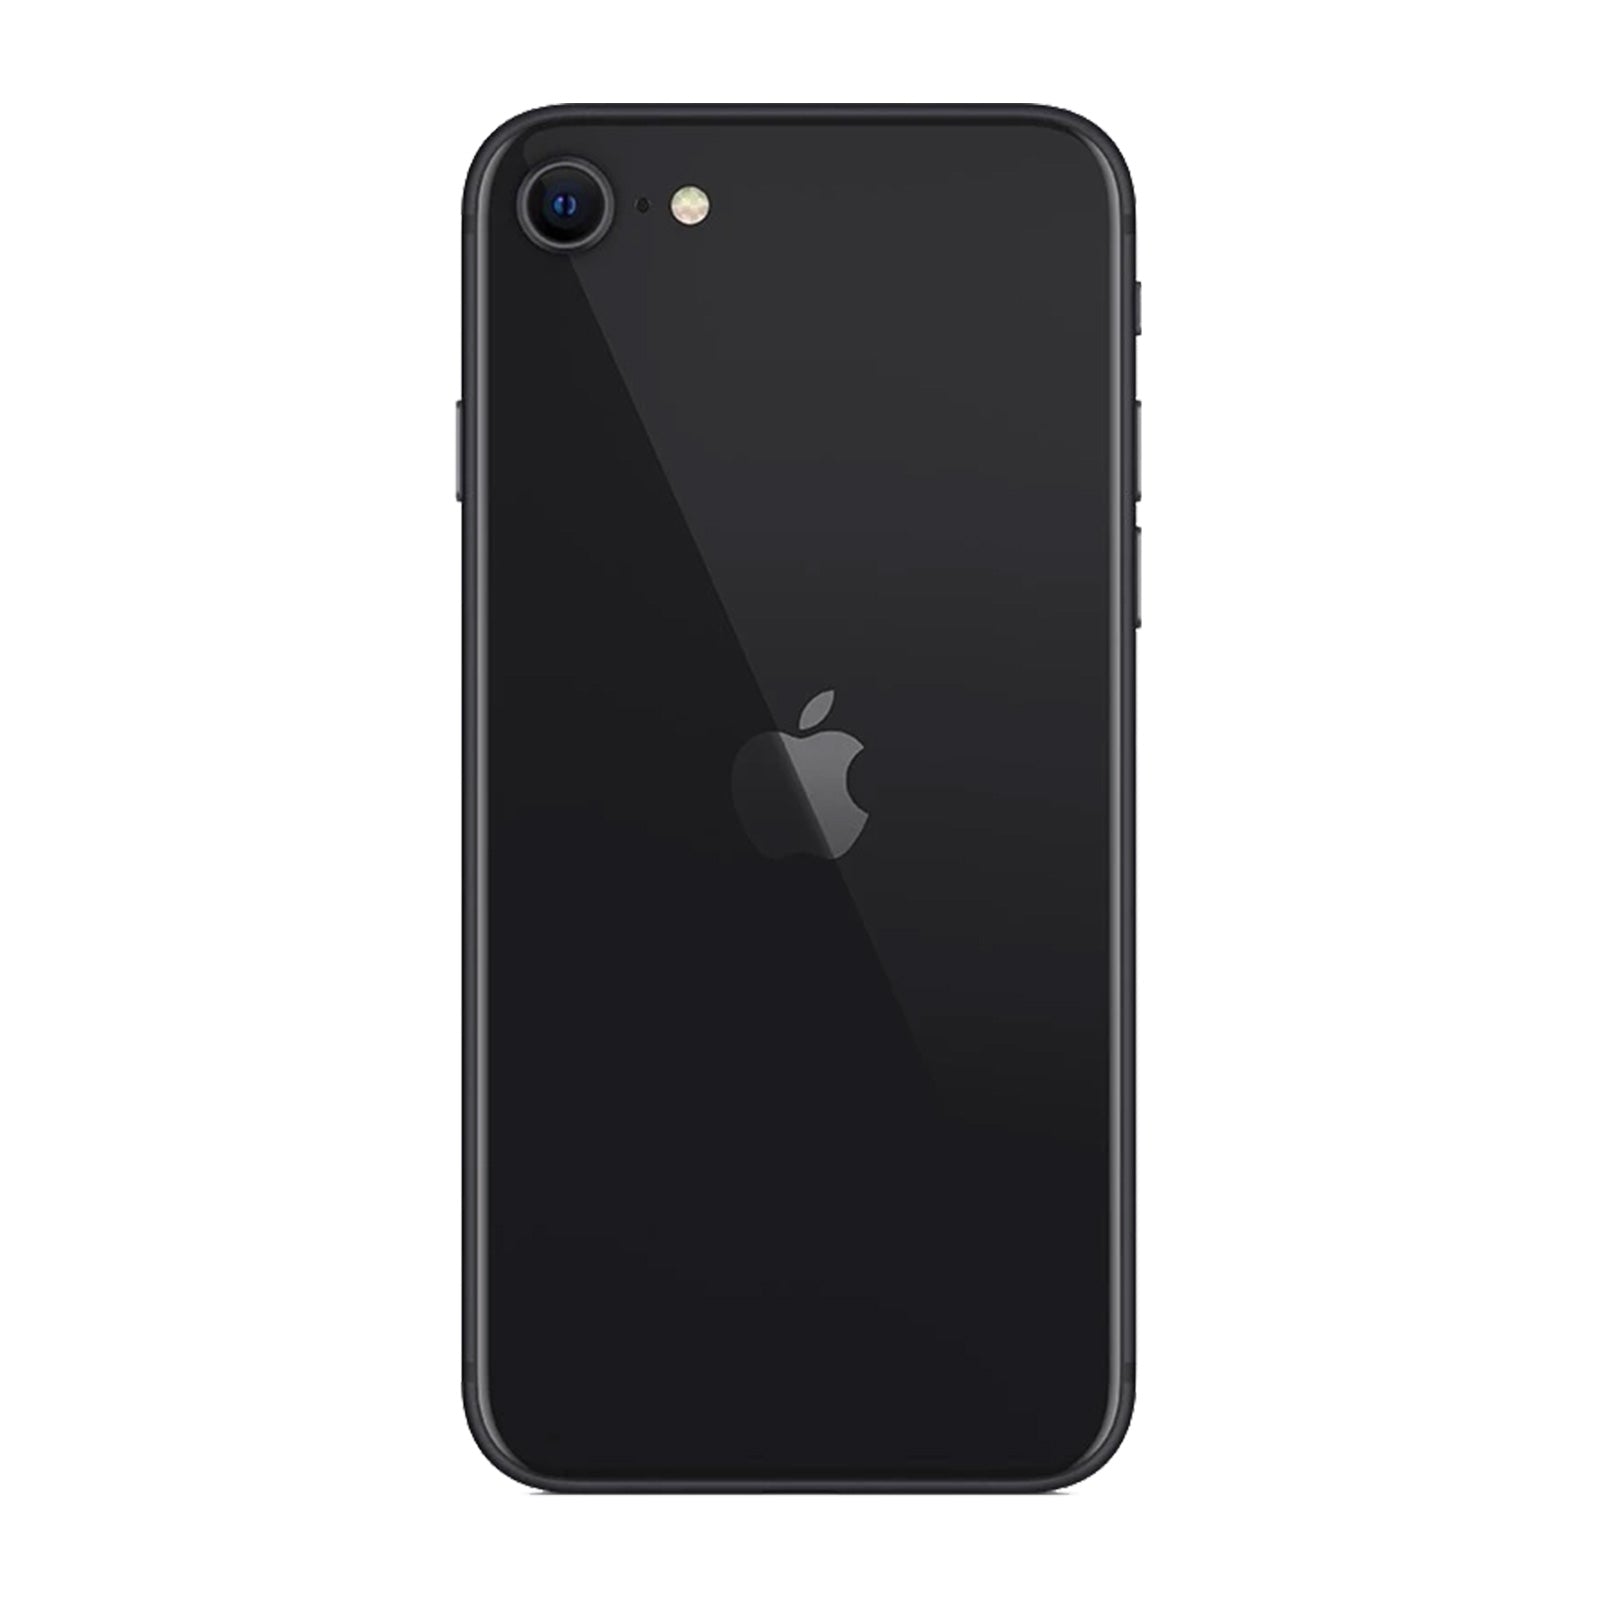 Apple iPhone SE 2nd Gen 256GB Black Very Good Unlocked